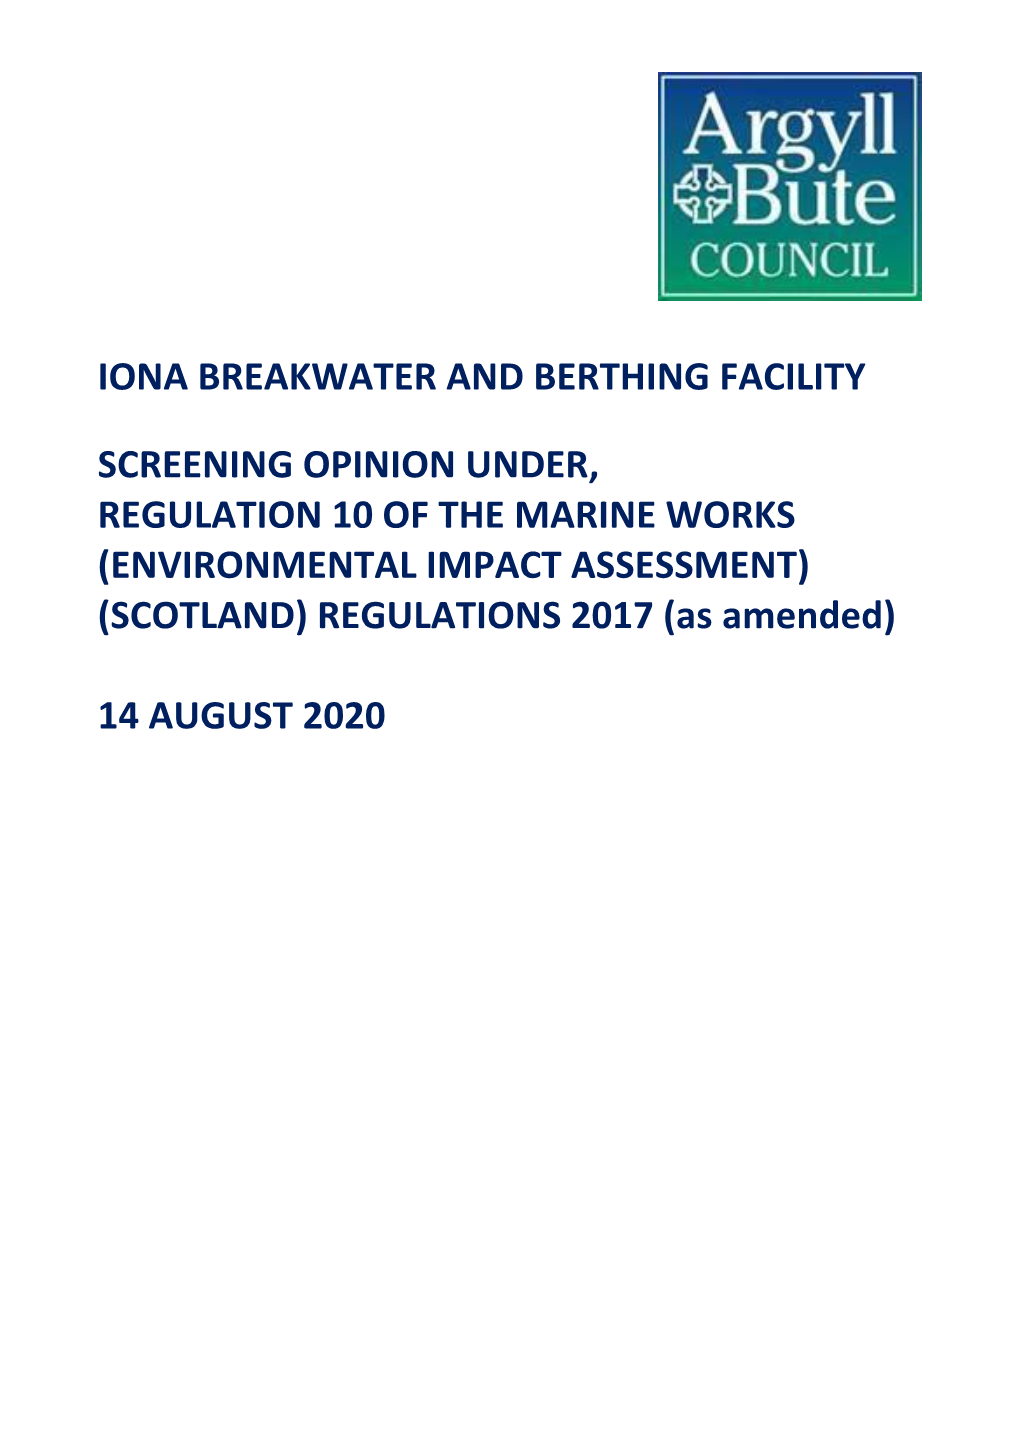 Iona Breakwater and Berthing Facility Screening